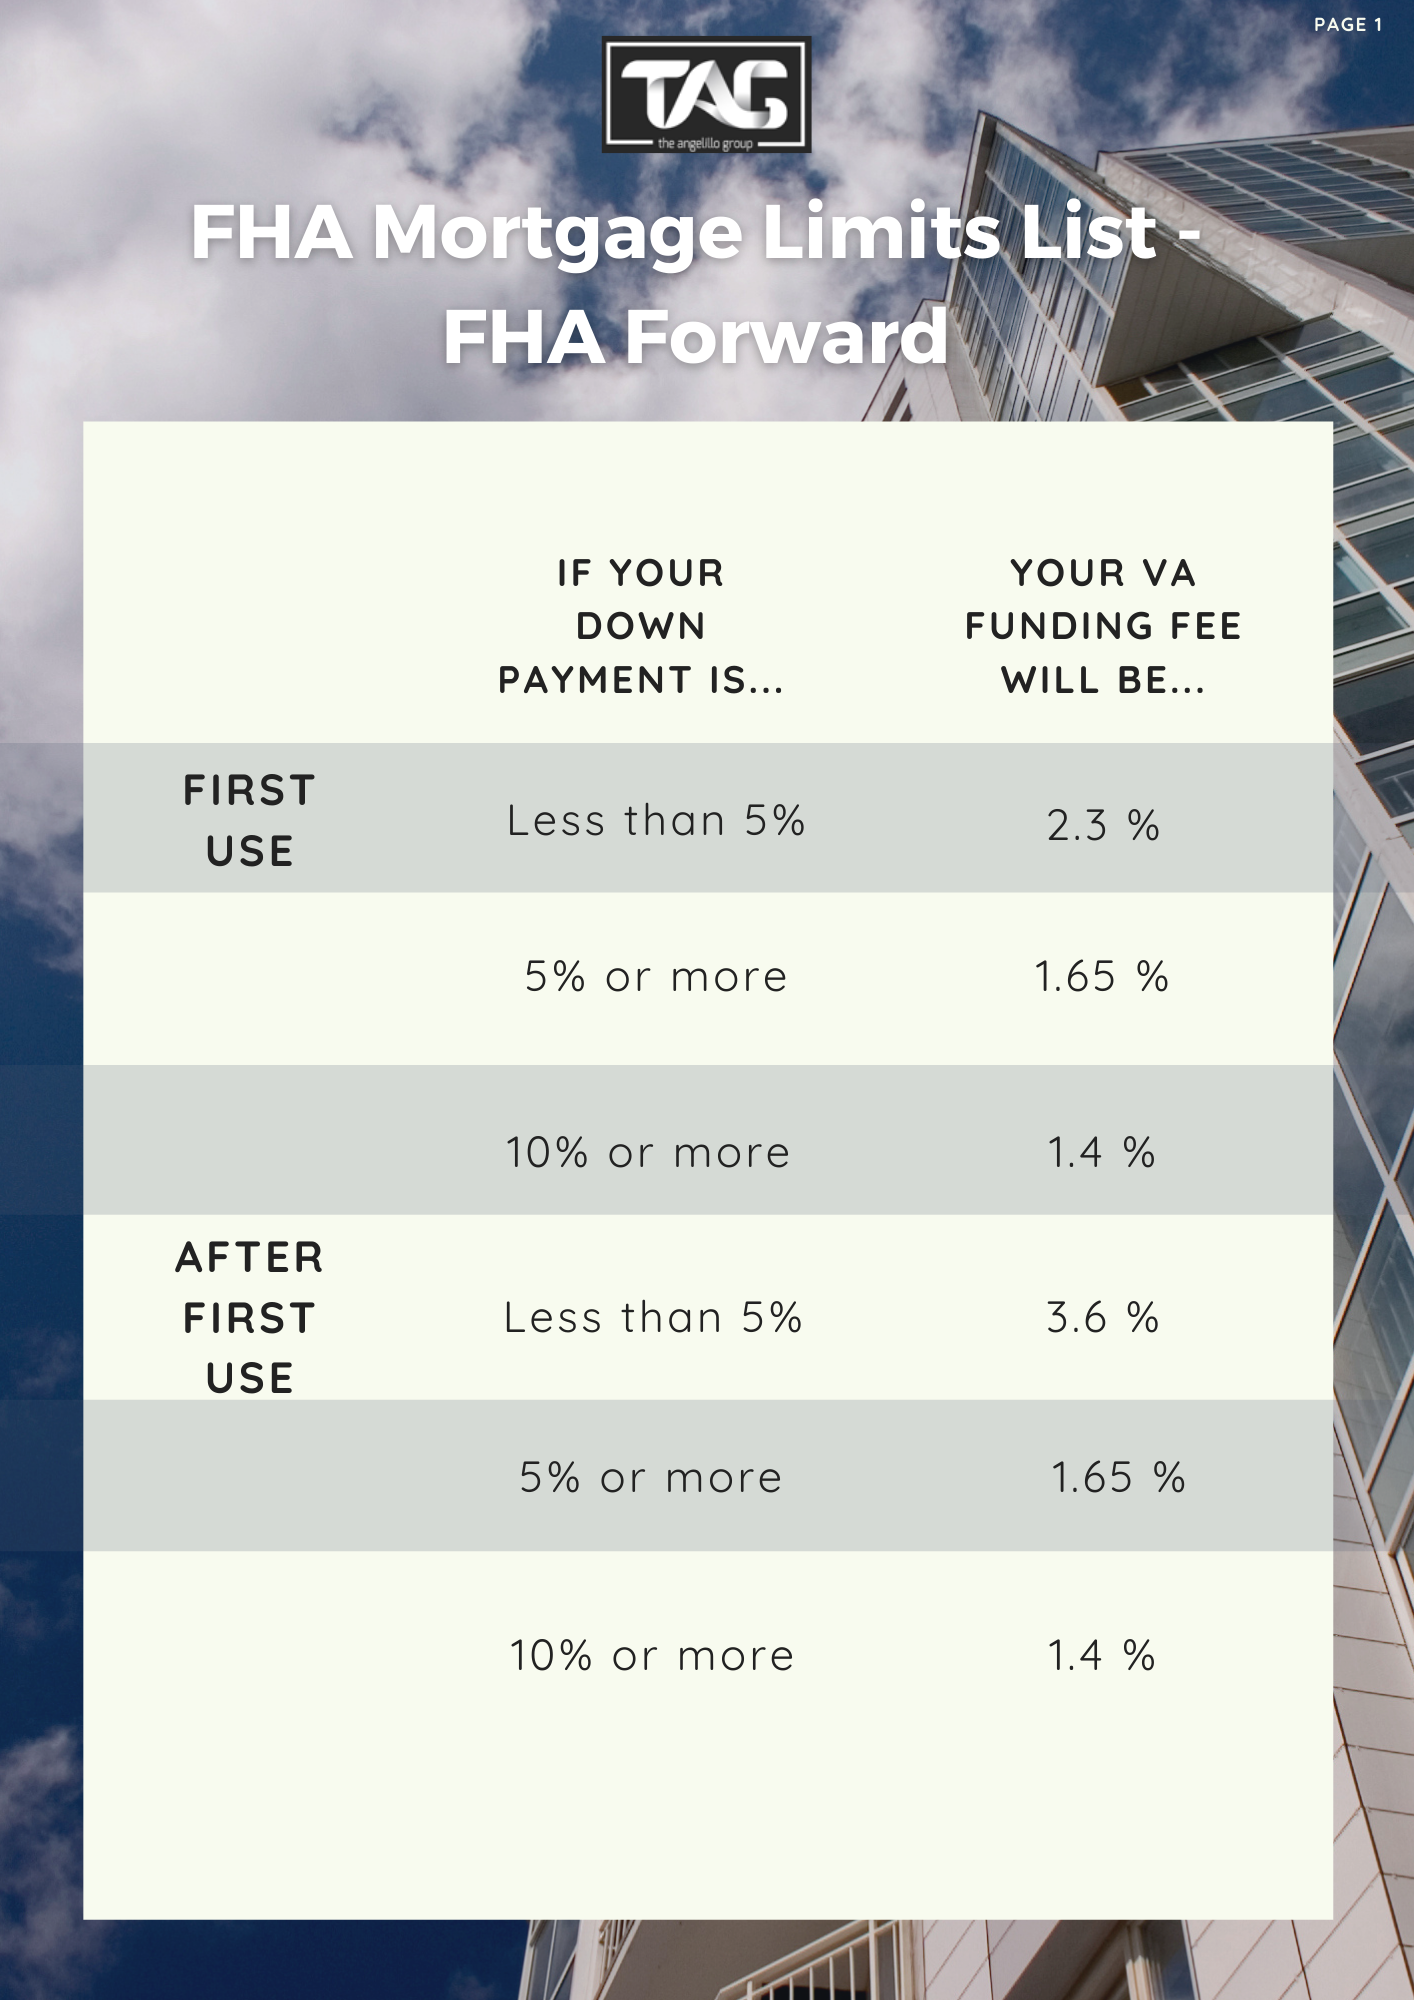 FHA Mortgage Limits List - FHA Forward (1)-1